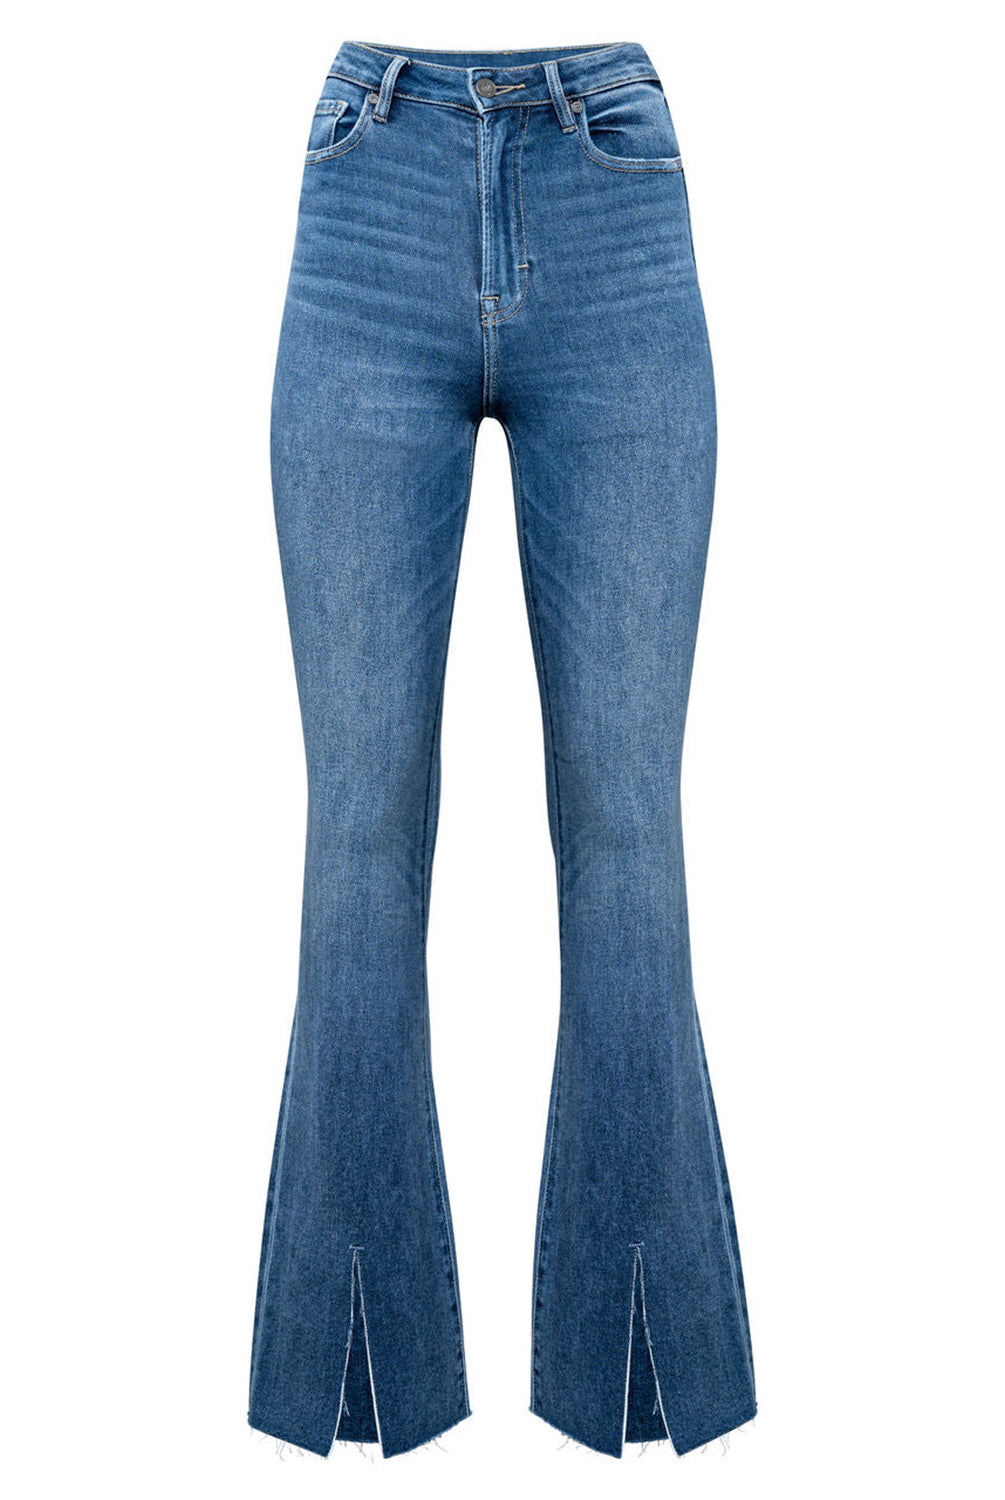 Dark Slate Blue Slit Bootcut Jeans with Pockets